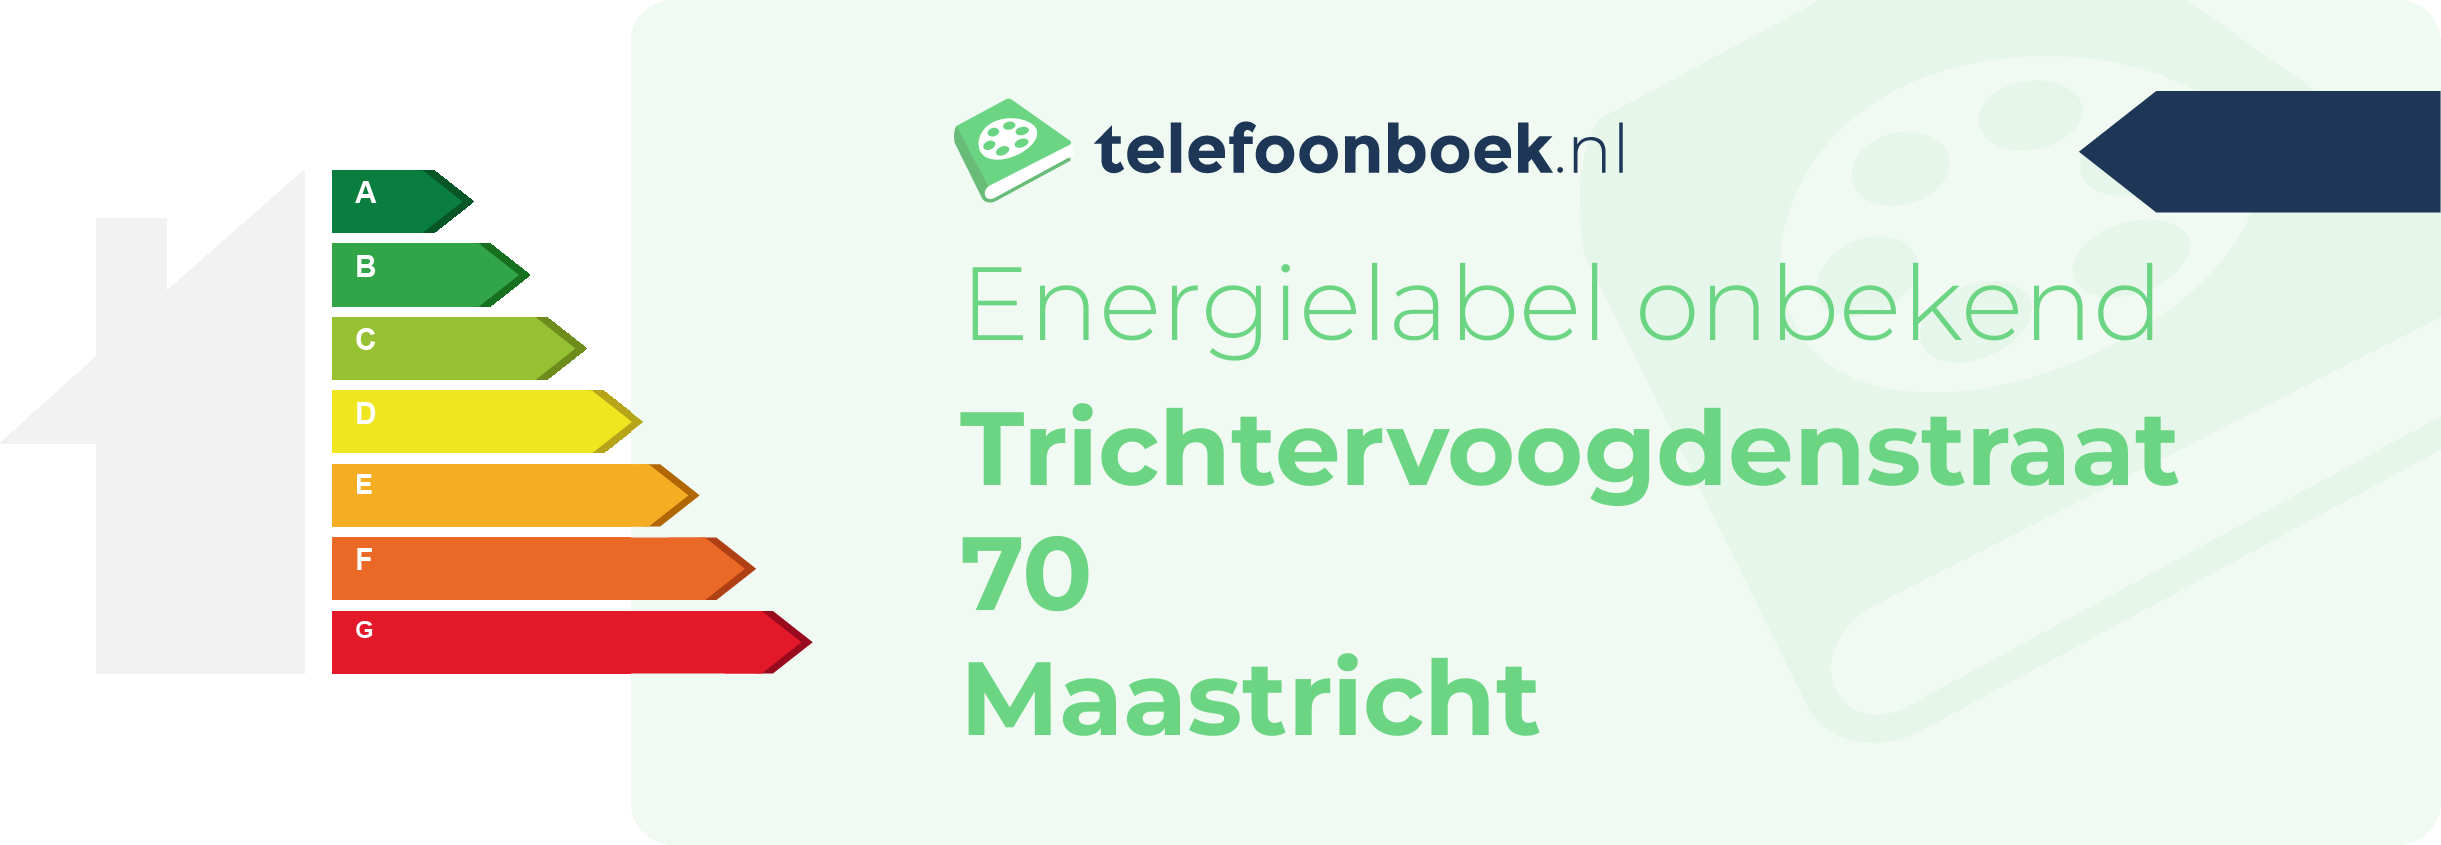 Energielabel Trichtervoogdenstraat 70 Maastricht